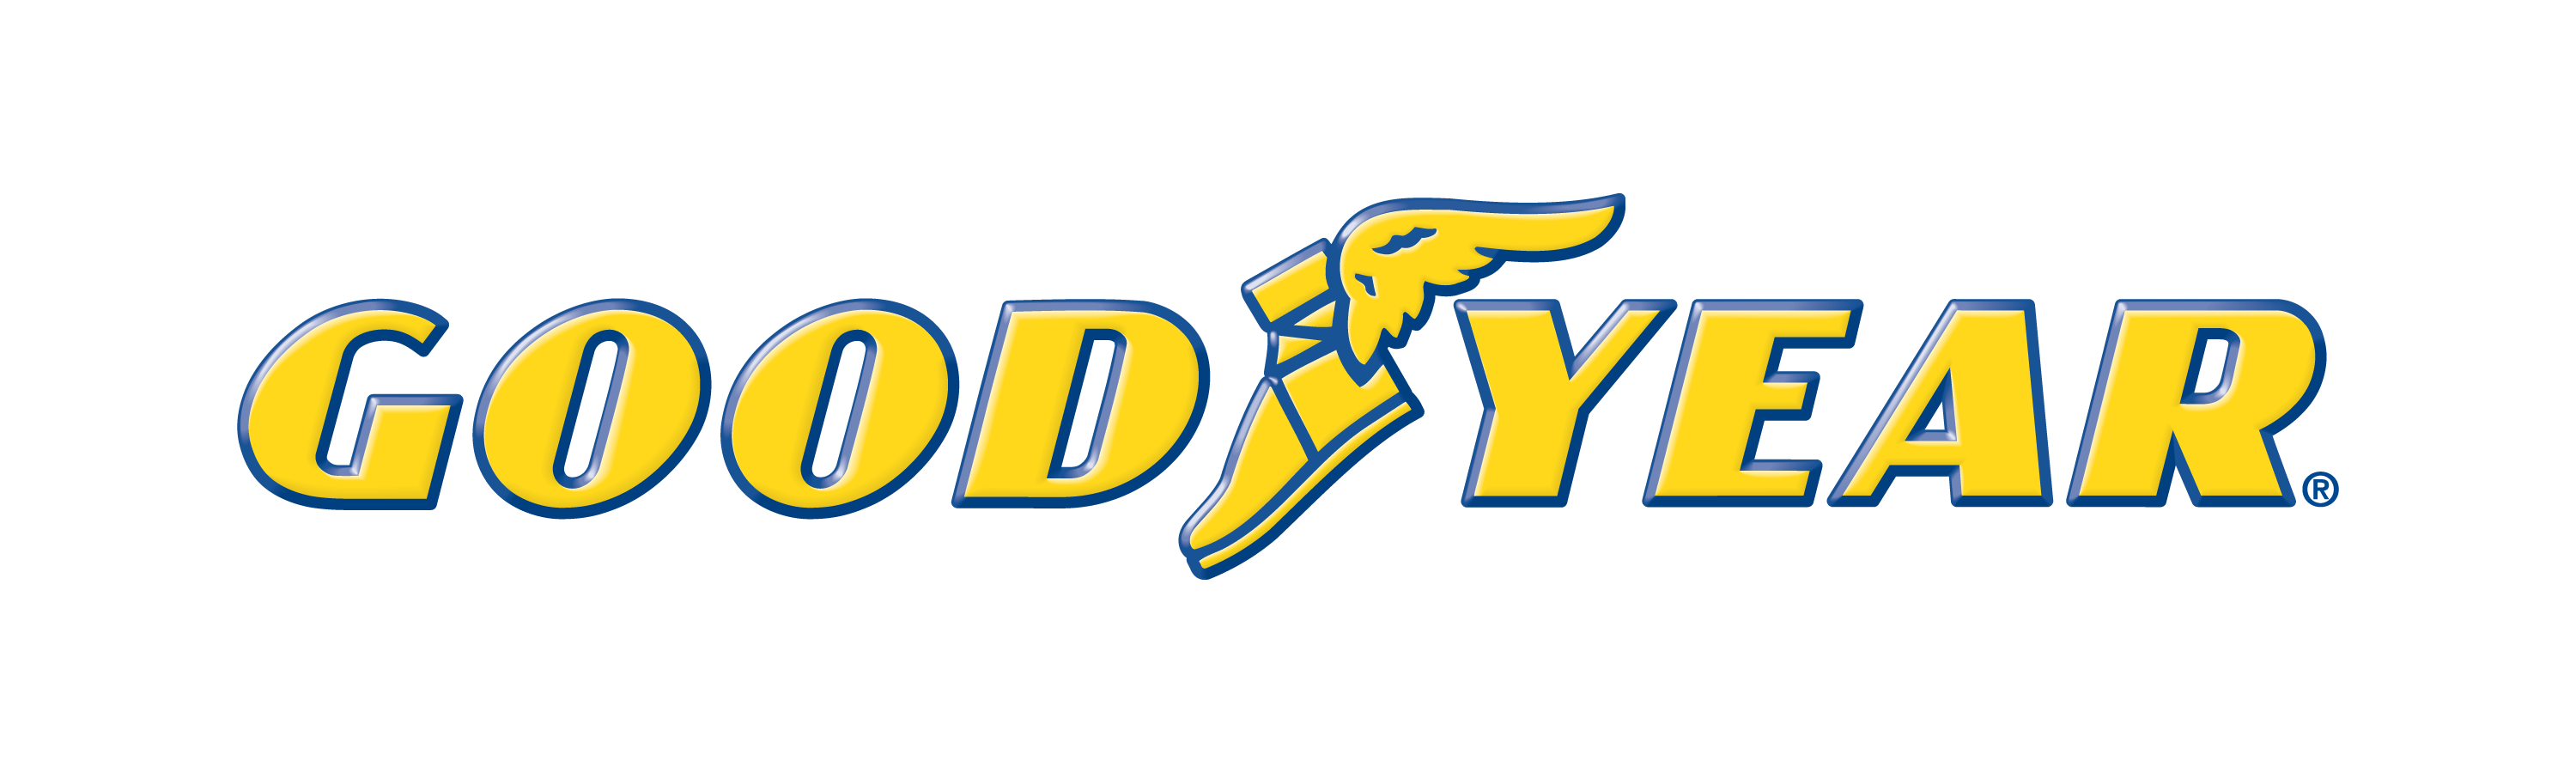 goodyear logo transparent